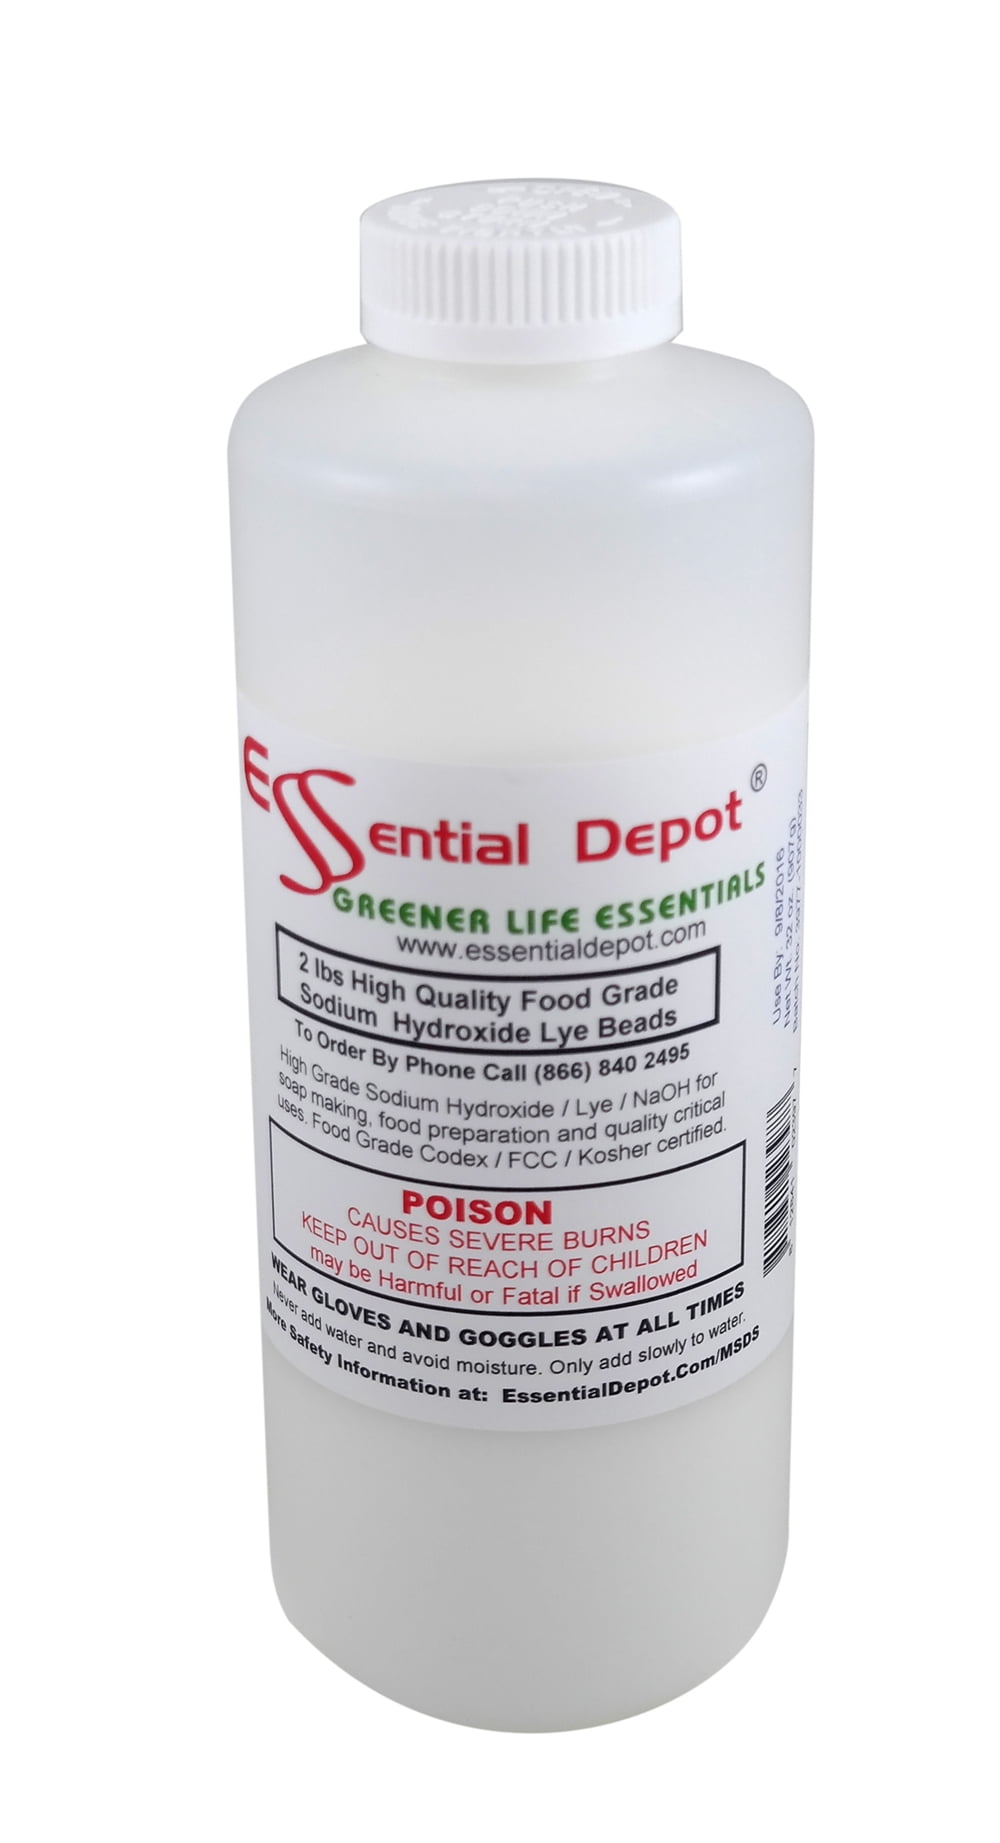 Sodium Hydroxide - Lye - Caustic Soda - NaOH: Essential Depot